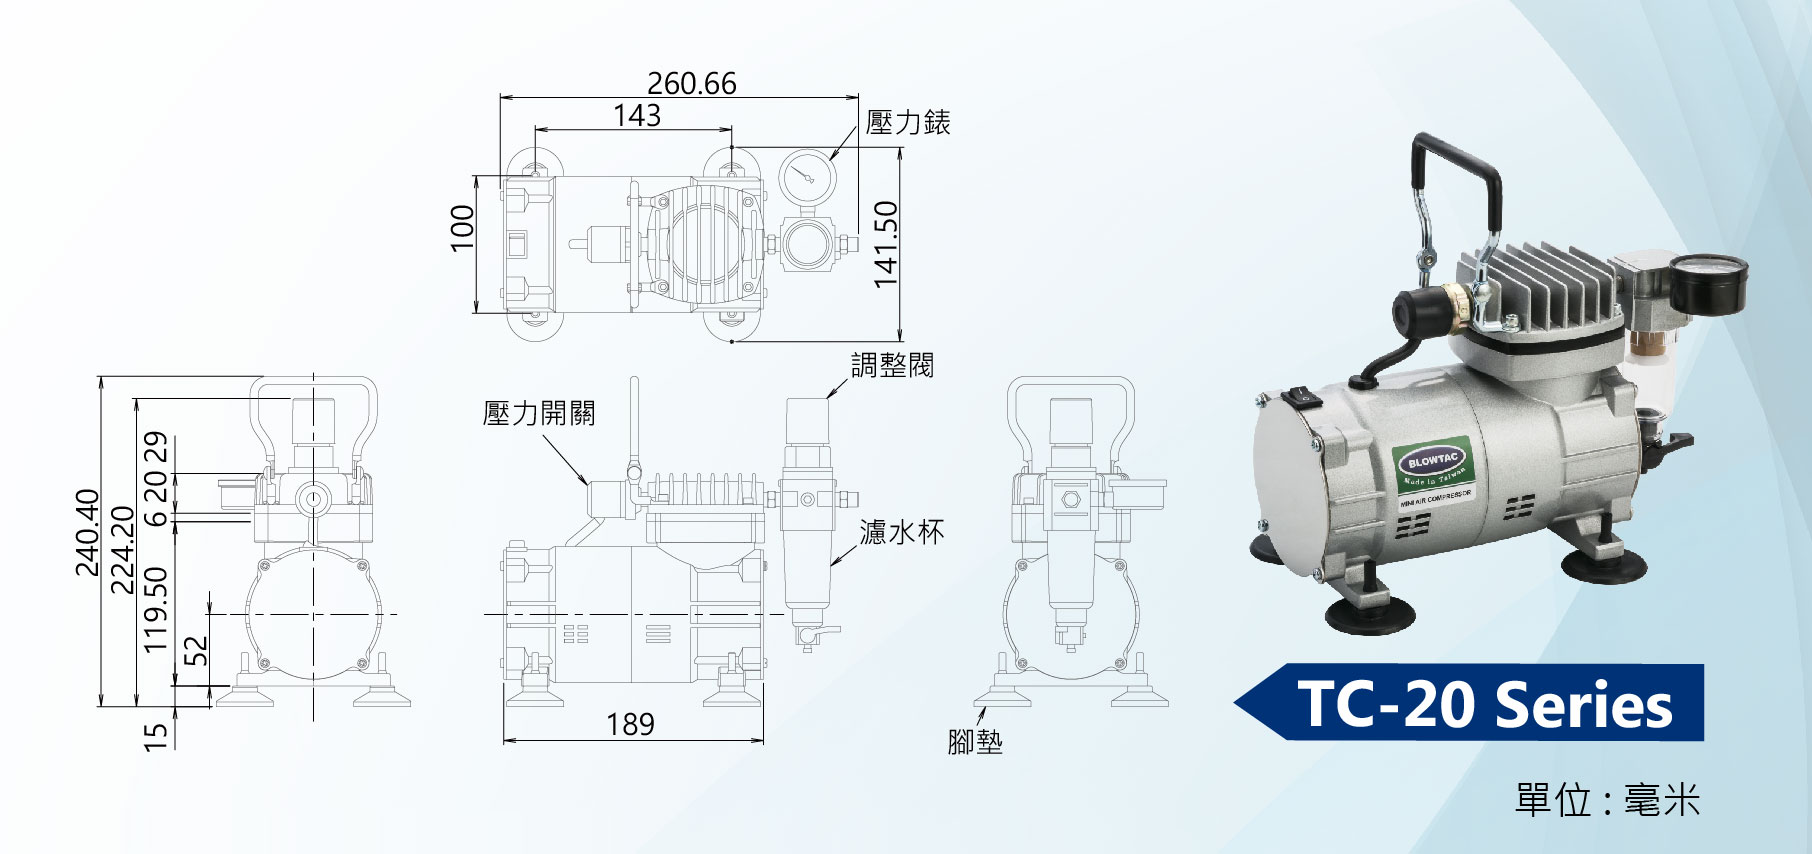 TC-20 Series Mini Air Compressors Dimension